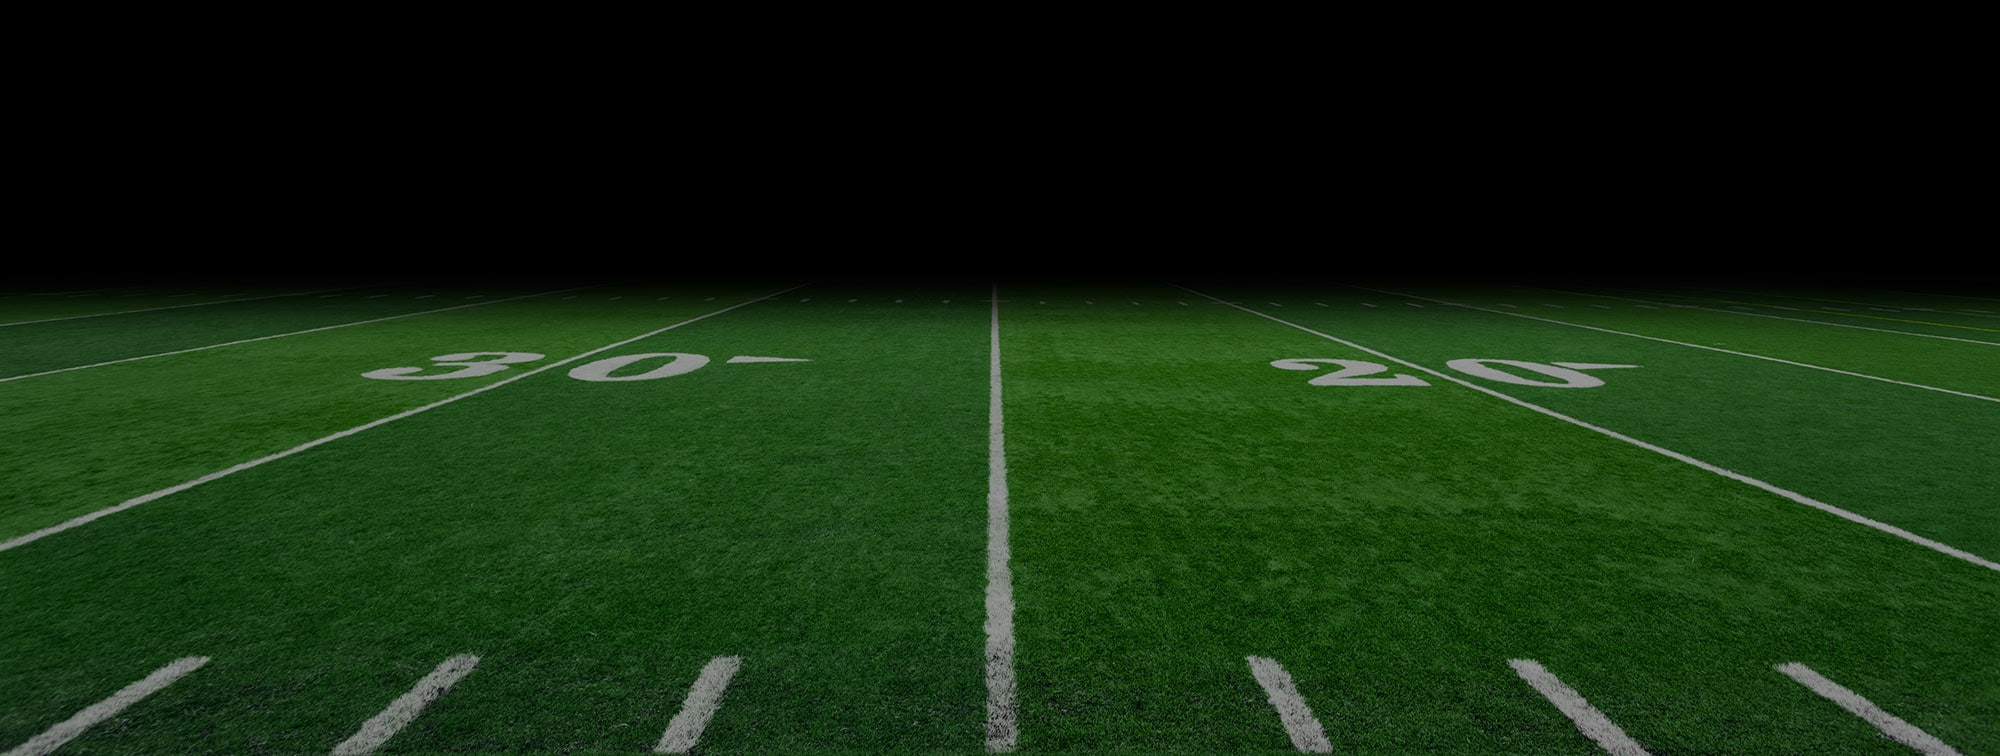 football-field | Andrew M. Blecher, MD - Regenexx Provider | Southern